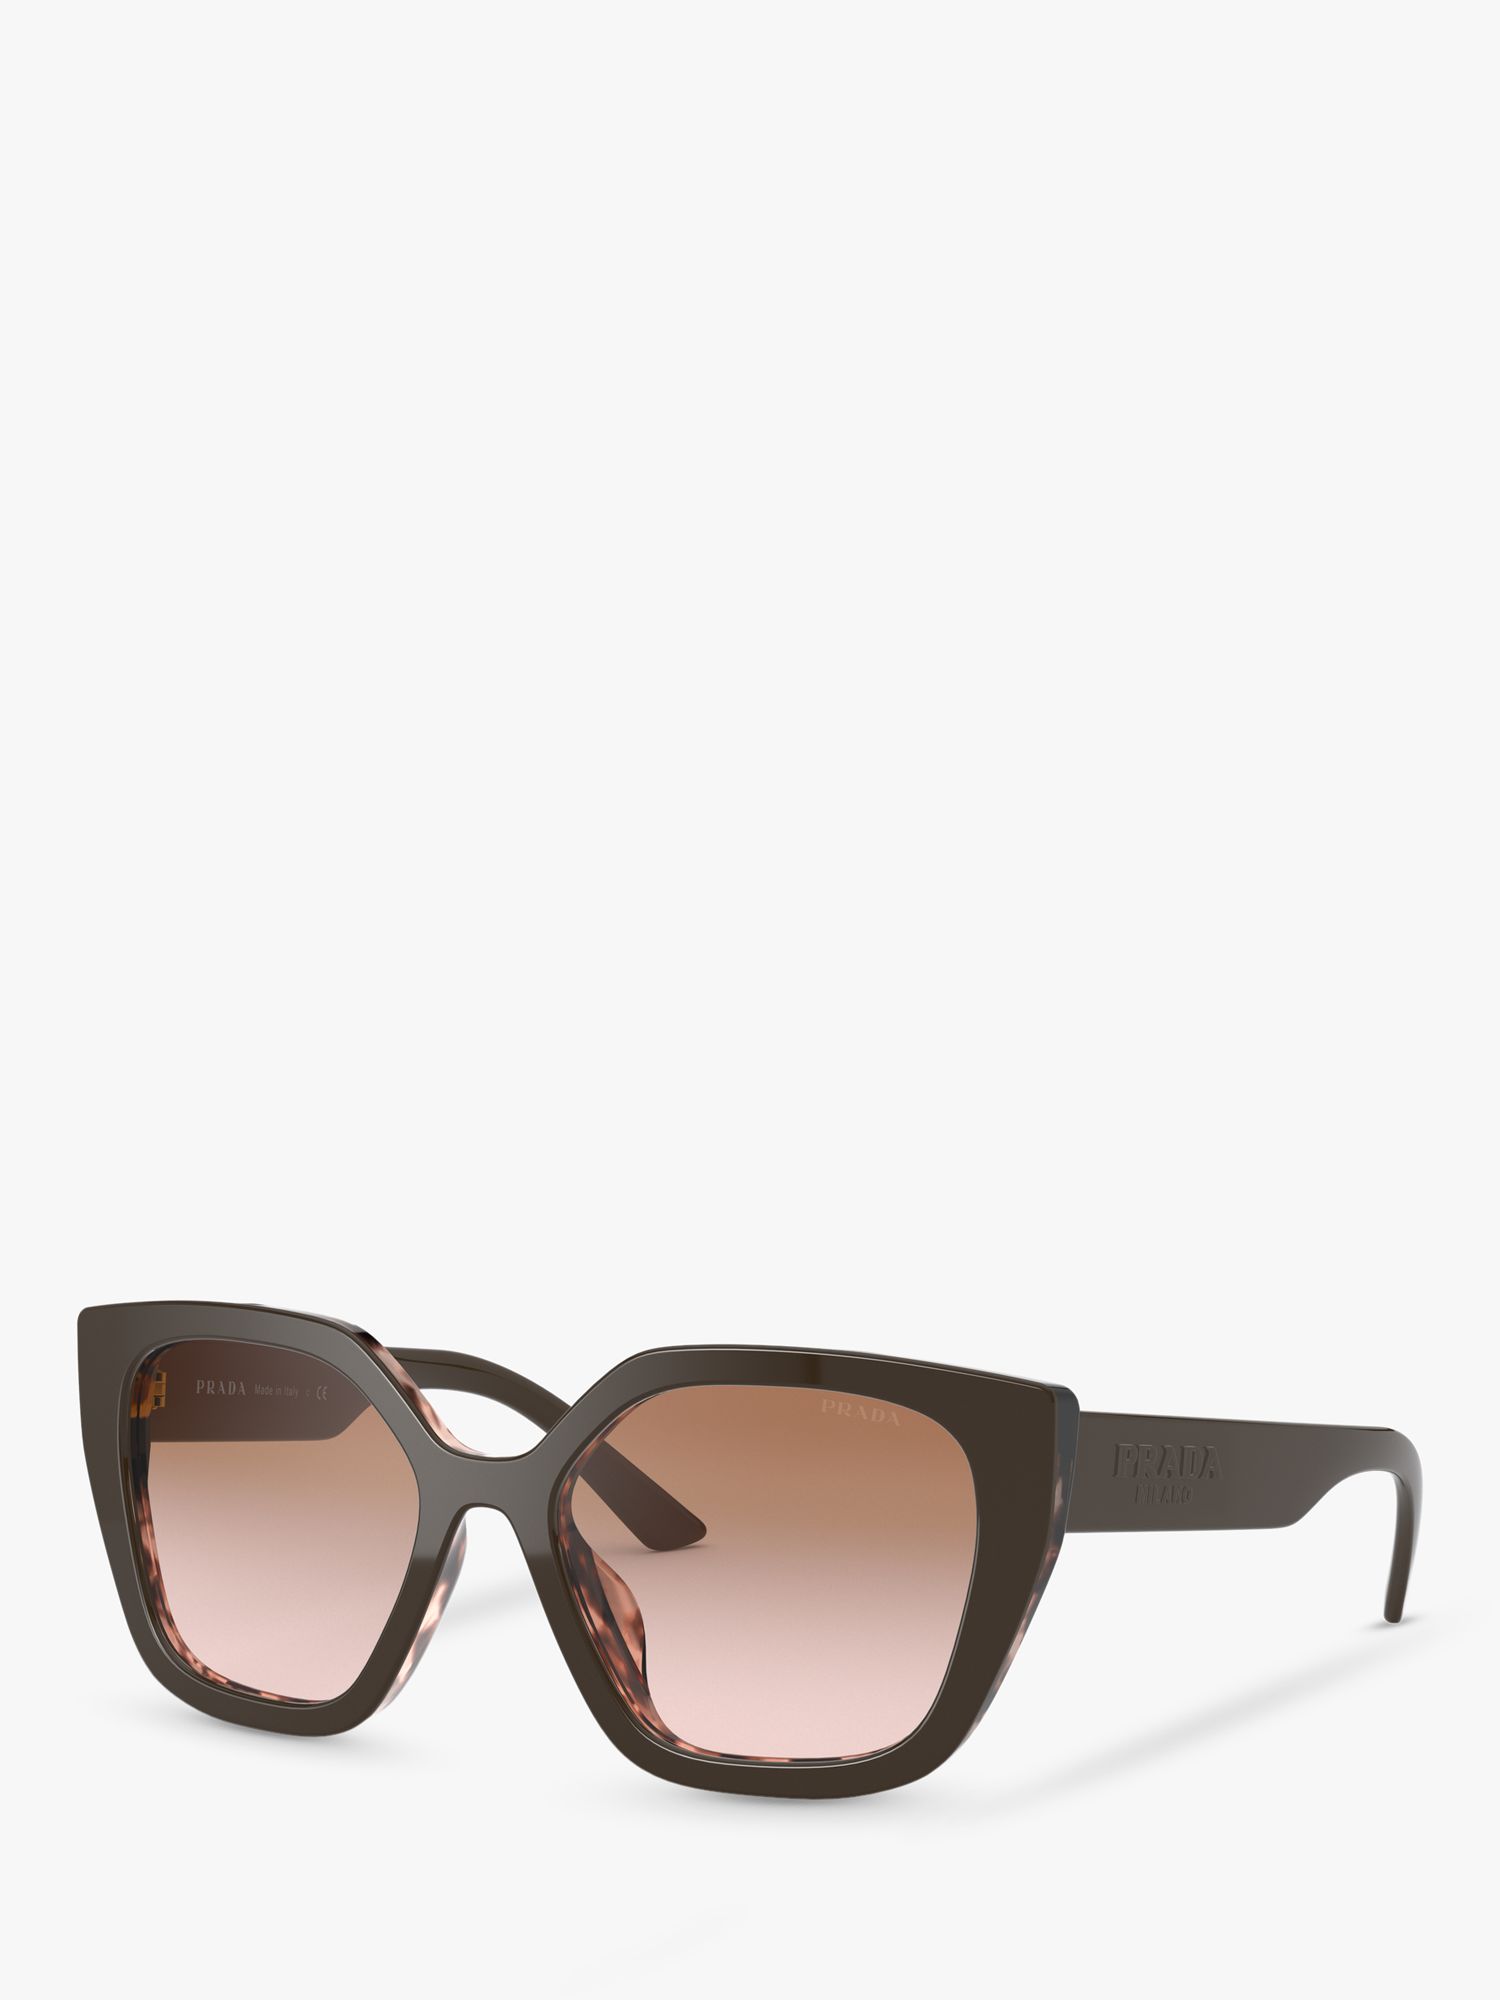 Prada PR24XS Women's Rectangular Sunglasses, Brown/Spotted Pink Gradient WAS £213.00, NOW £106.50